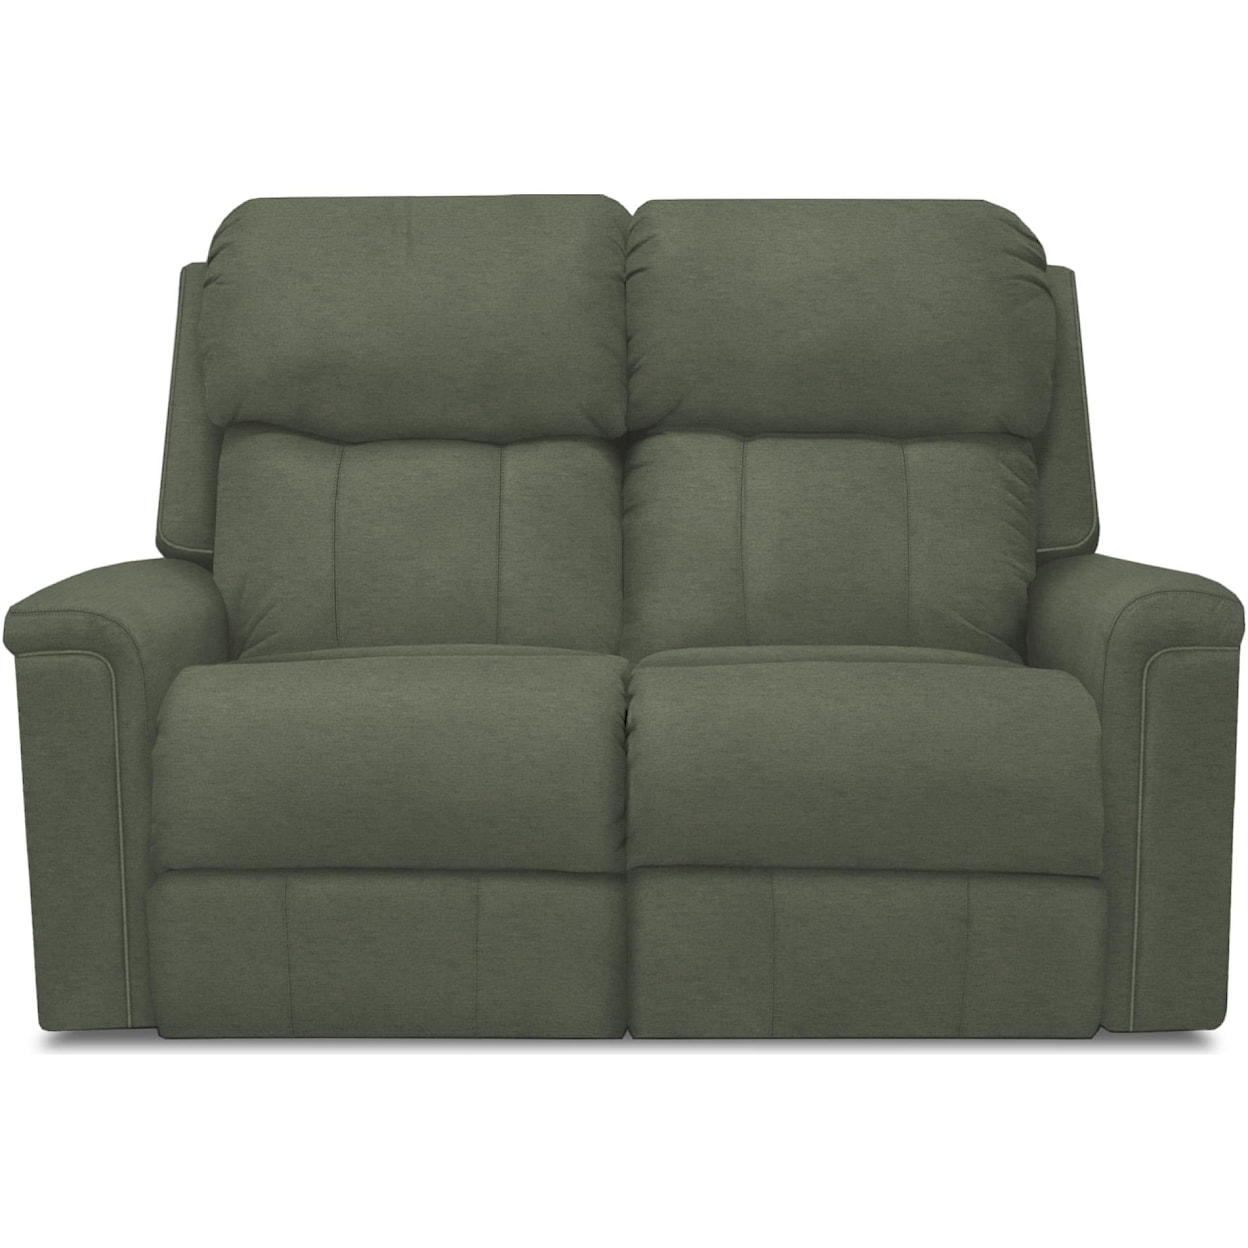 Tennessee Custom Upholstery EZ1C00/H/N Series EZ1C00 Double Reclining Loveseat